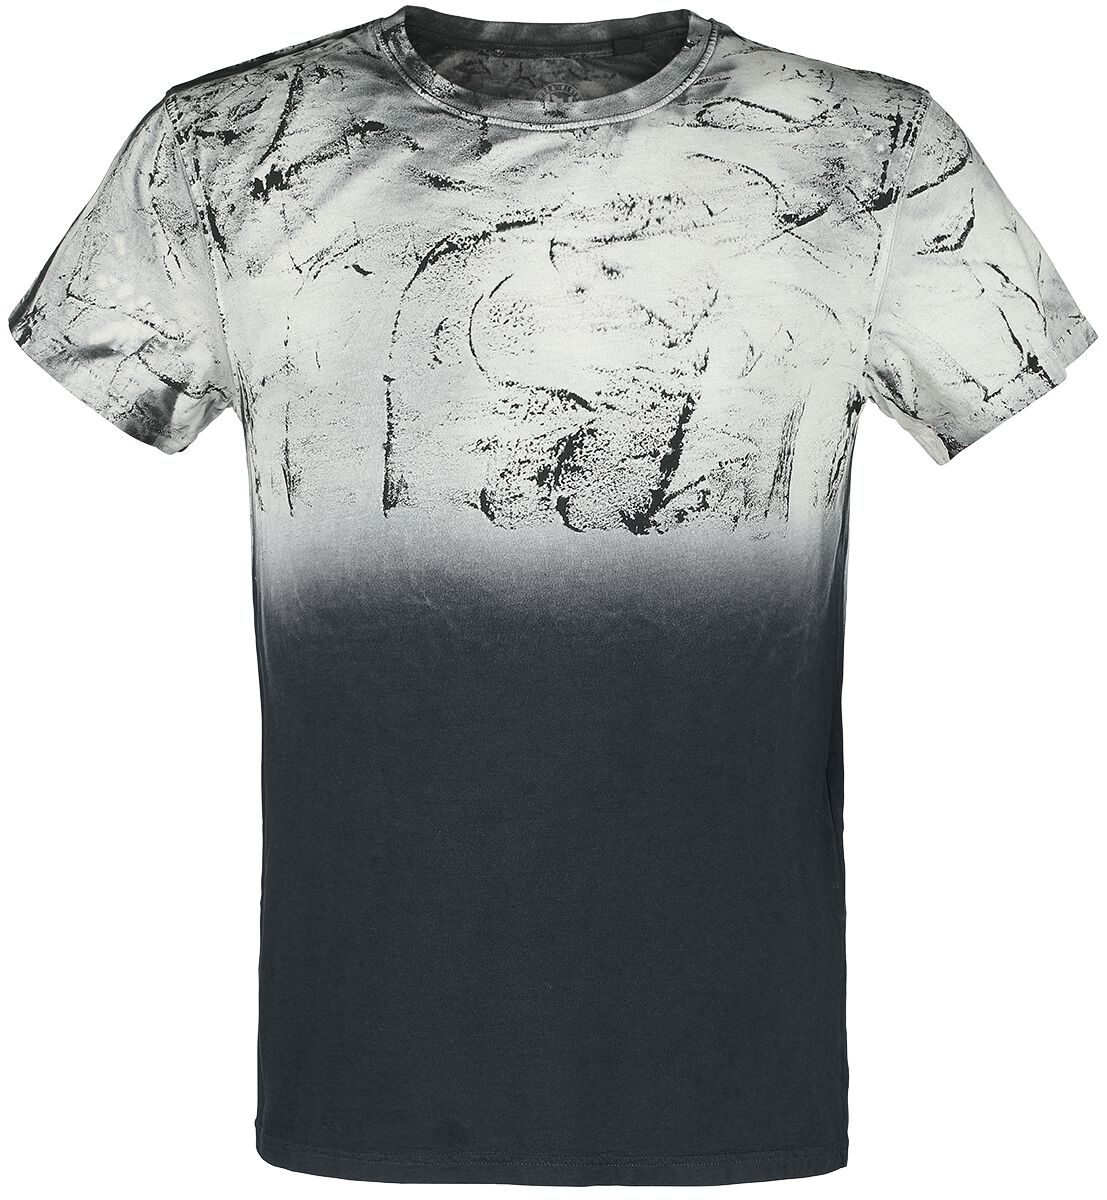 Image of T-Shirt di Outer Vision - Man's T-Shirt Spatolato - S a 4XL - Uomo - nero/grigio